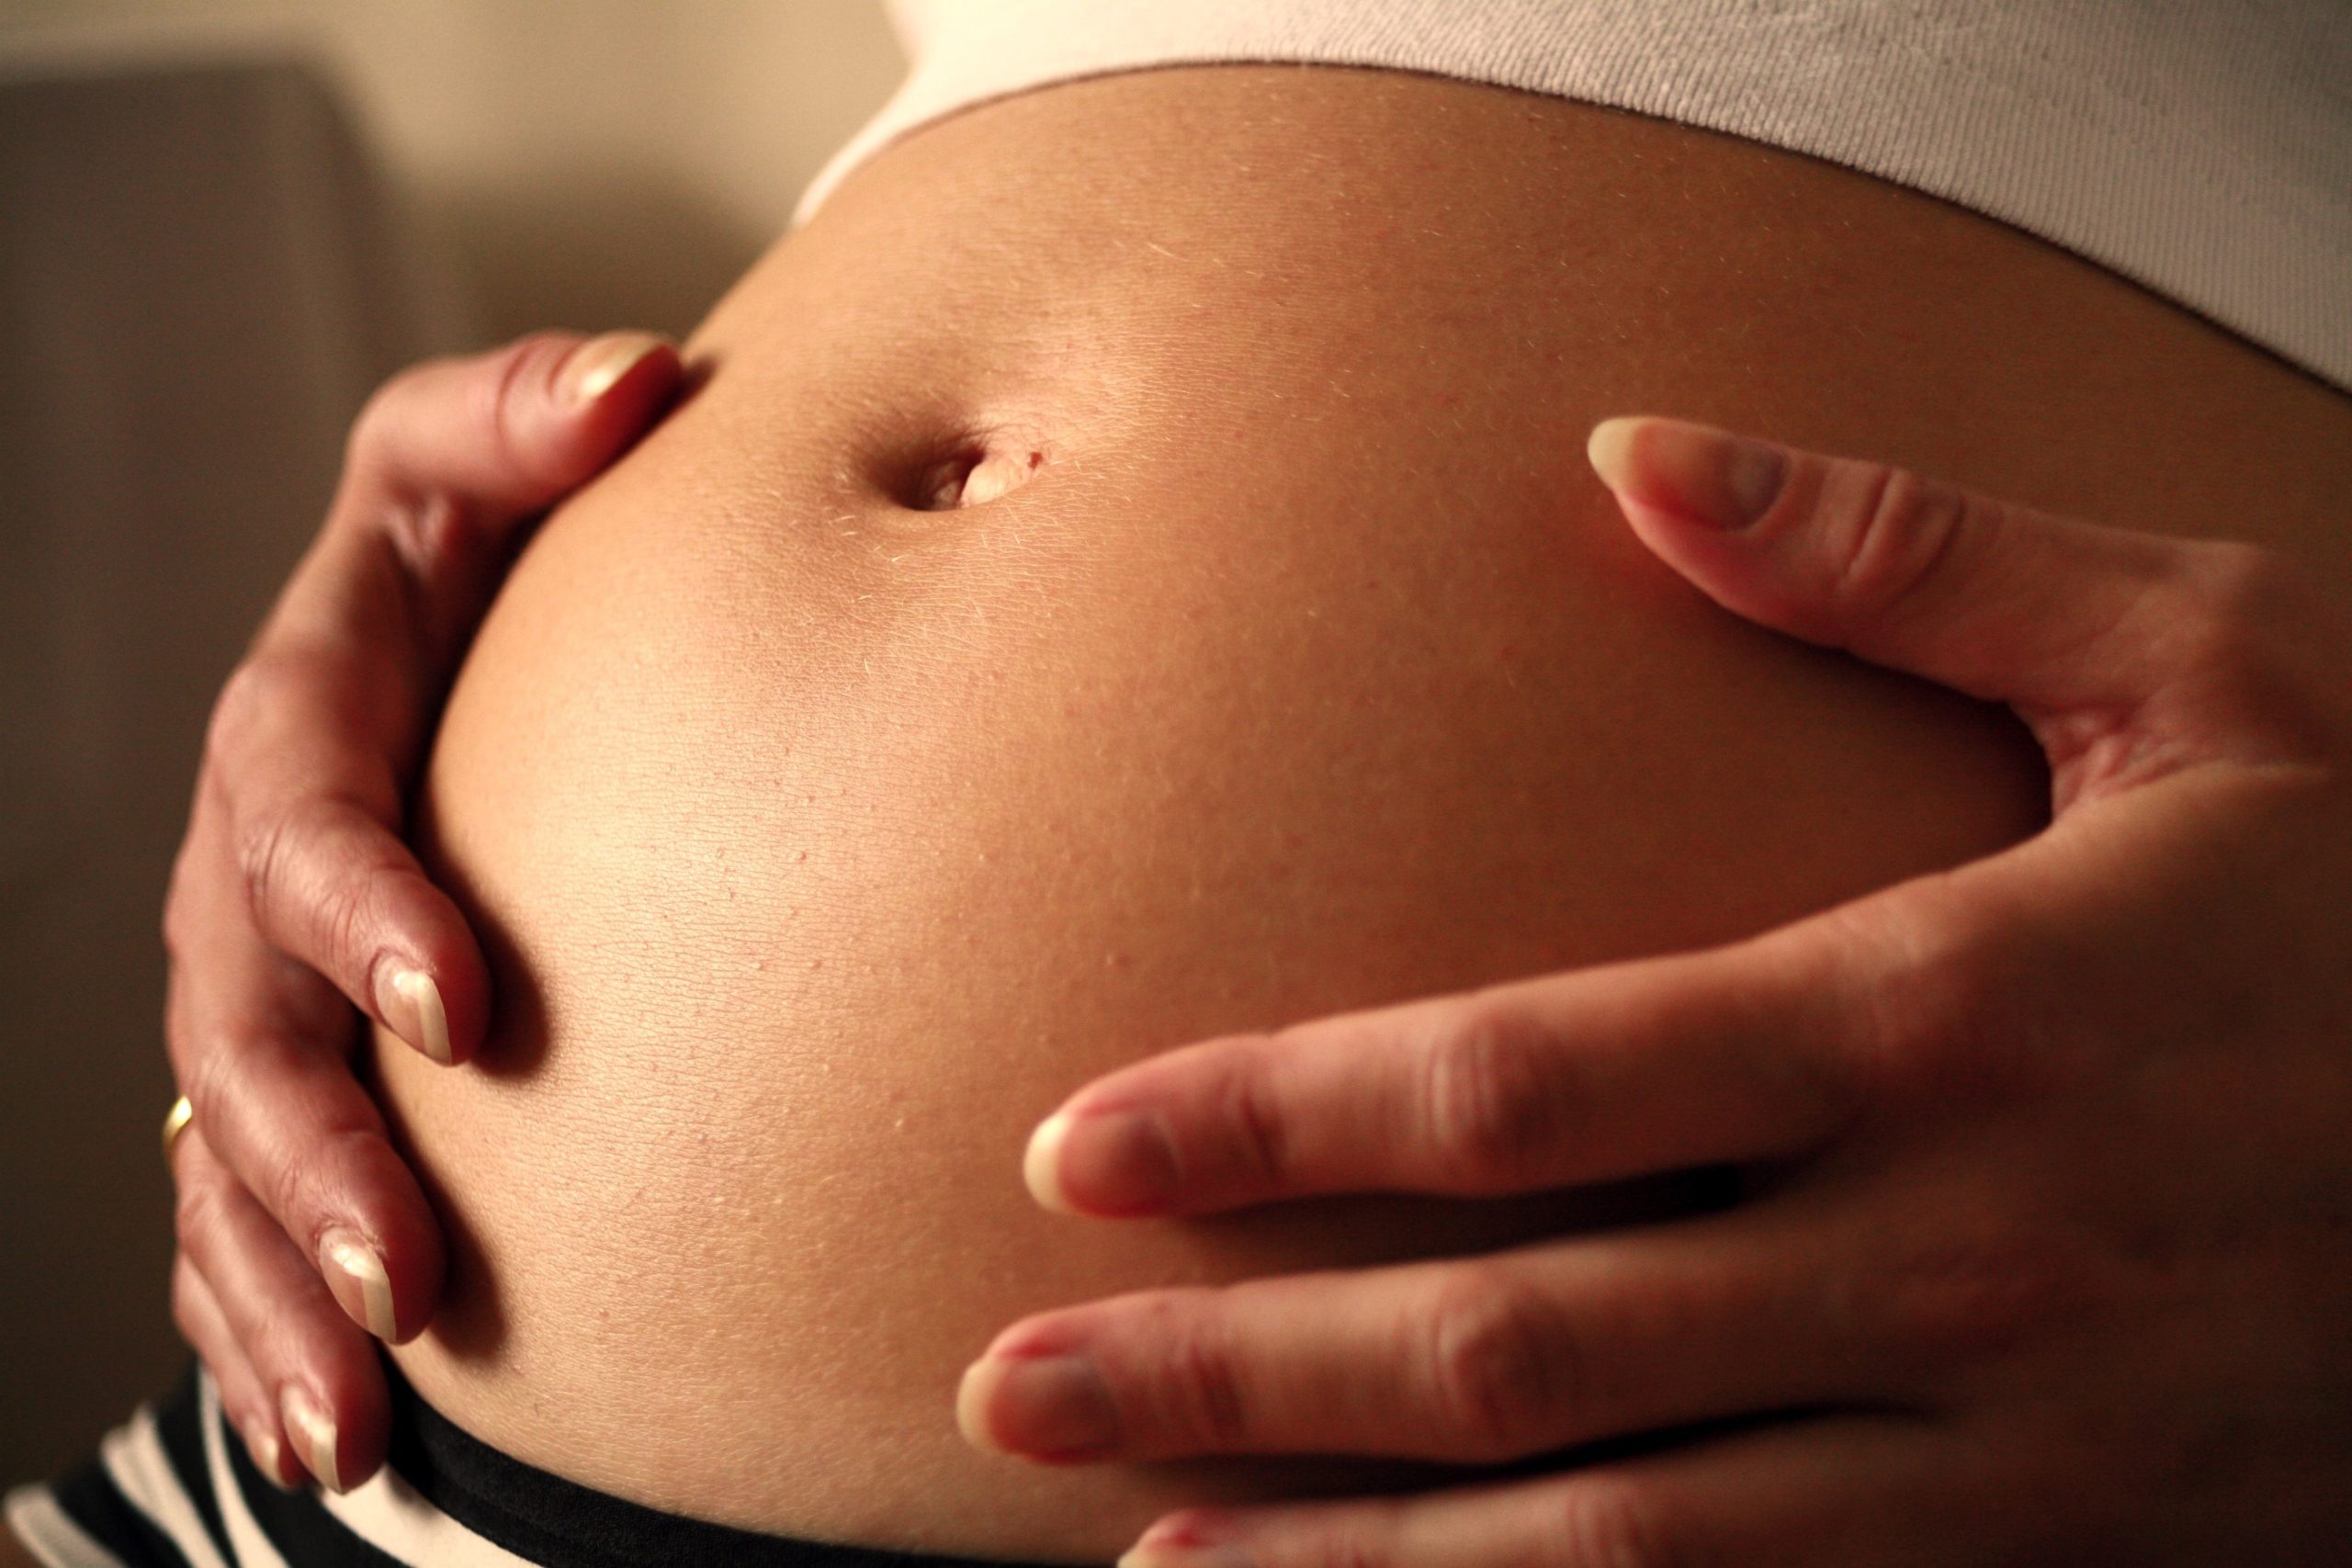 Surprise! Ελληνίδα τραγουδίστρια είναι έγκυος και μας το αποκάλυψε με μία φωτογραφία